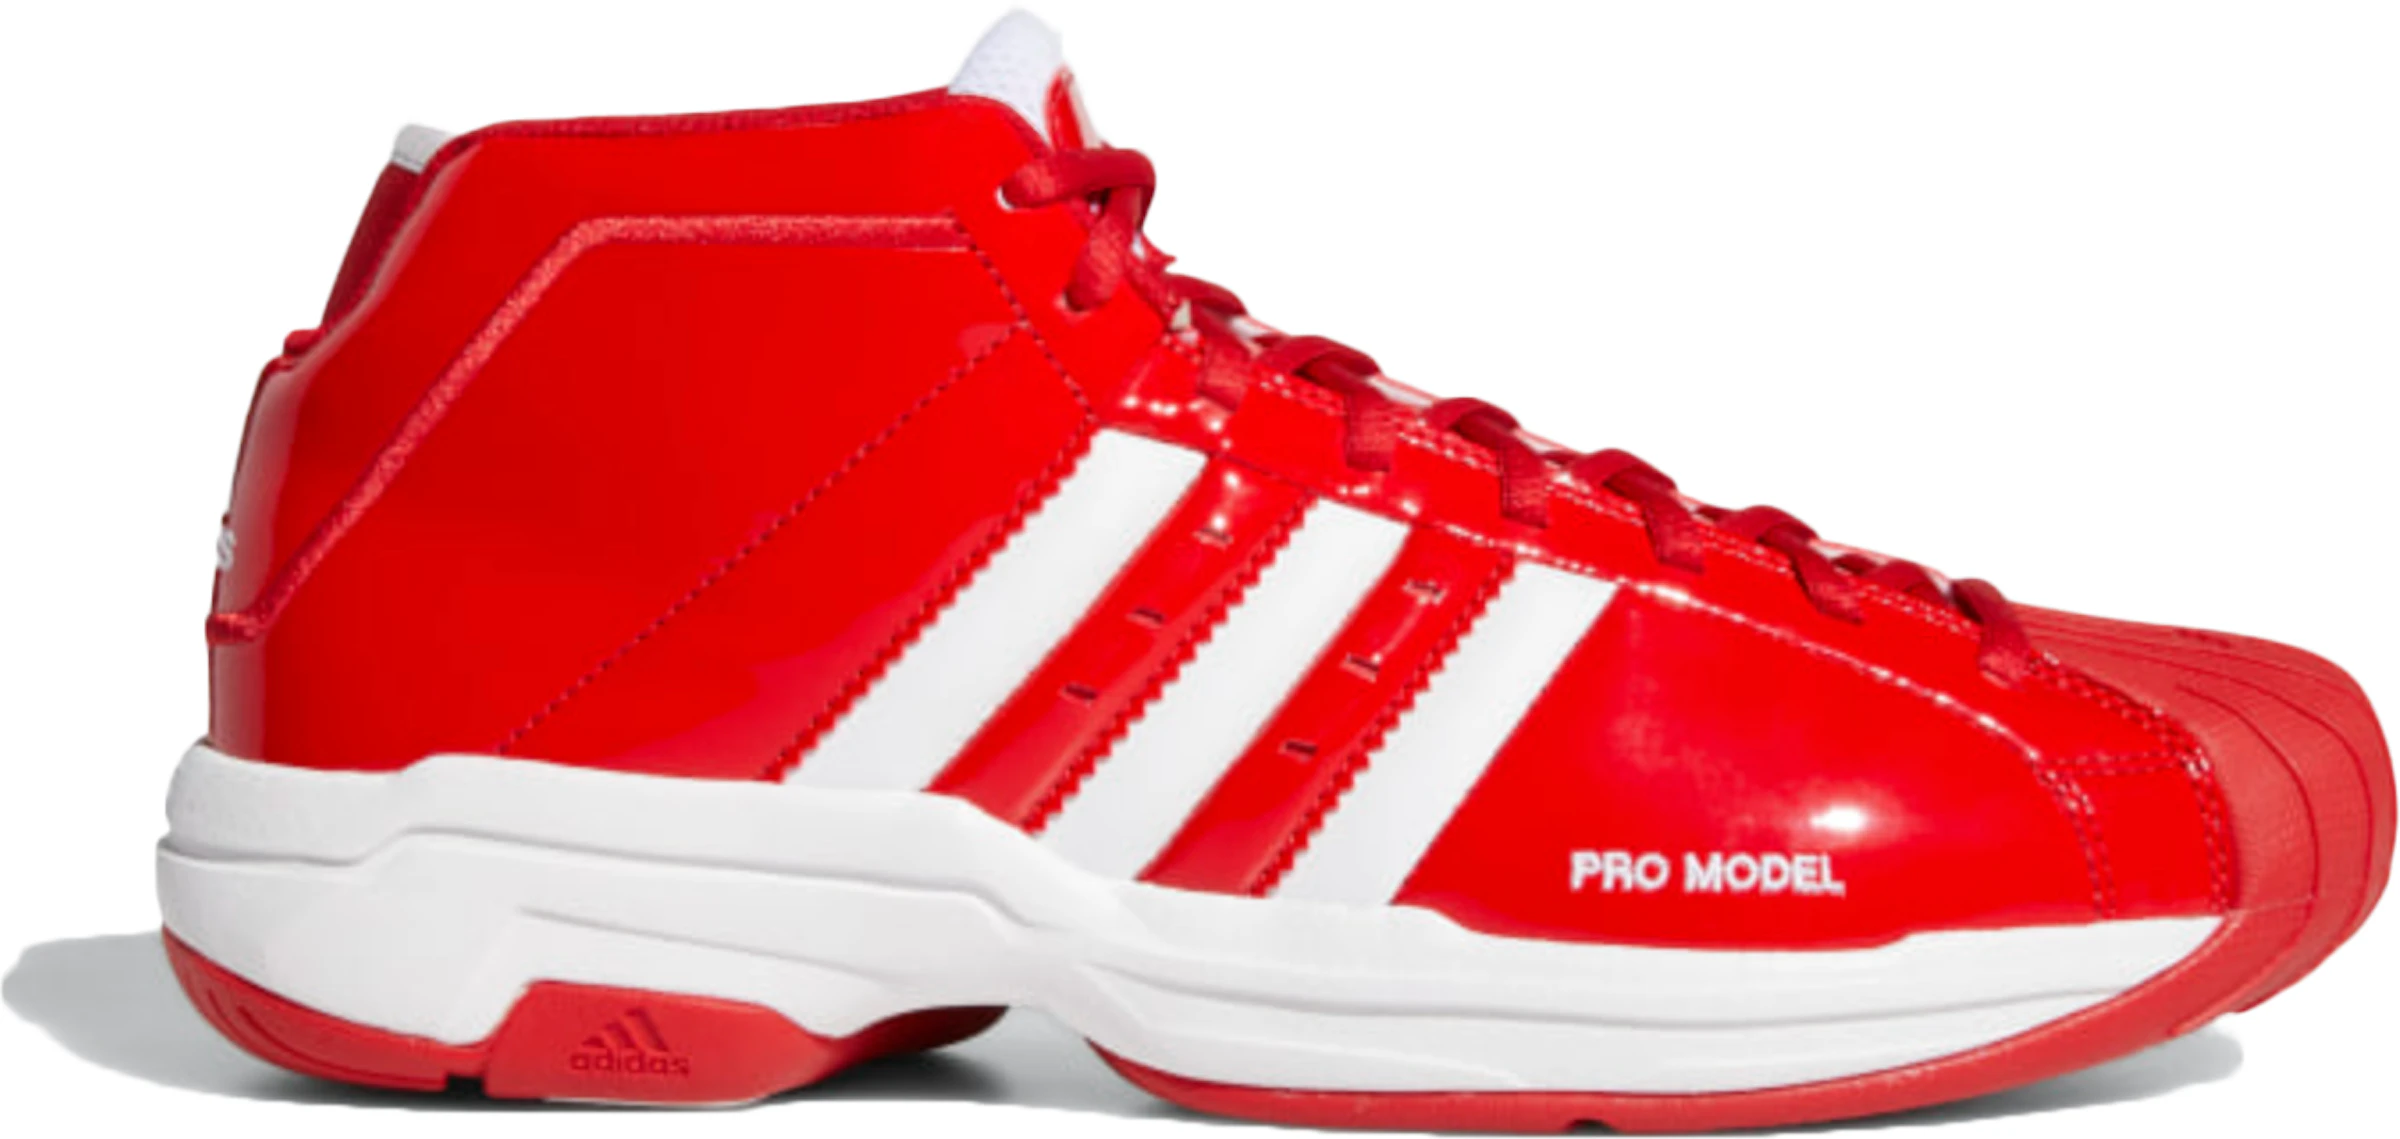 Adidas 2g Pro Model | lupon.gov.ph